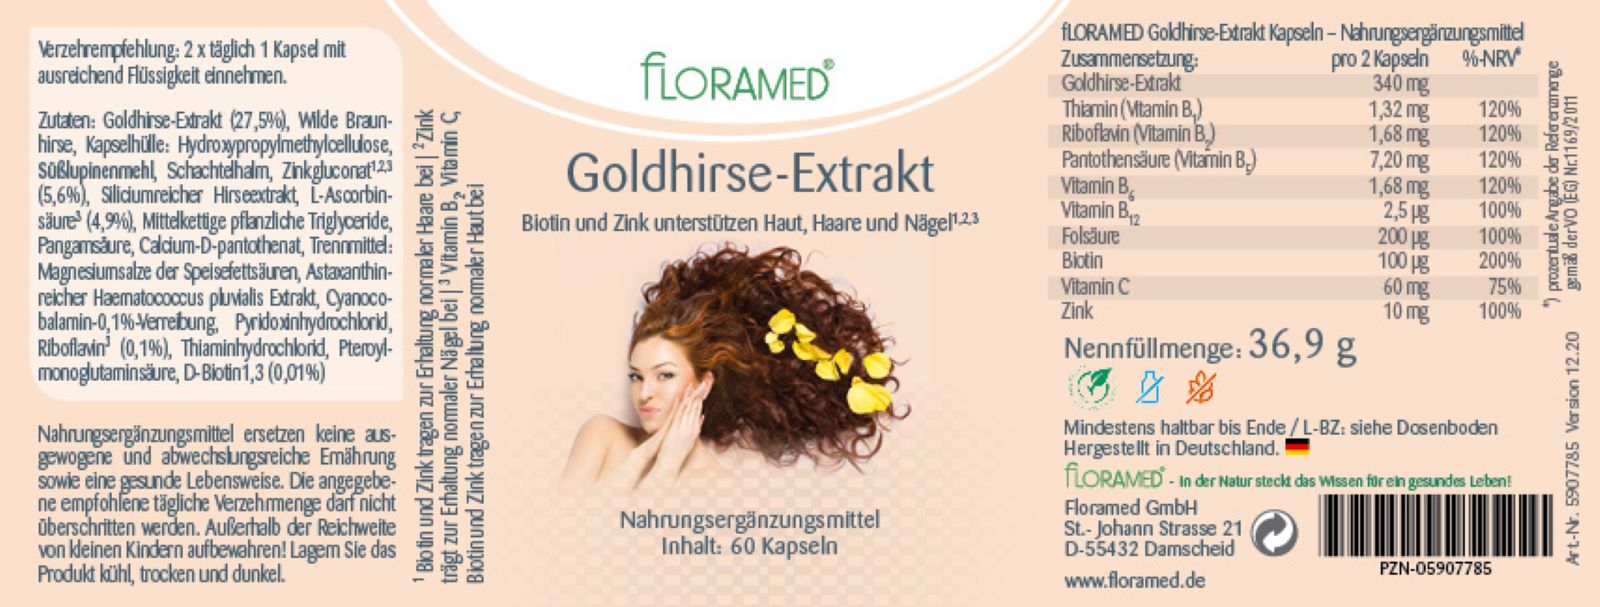 Floramed Goldhirse Extrakt - Haut,Haare, Nägel